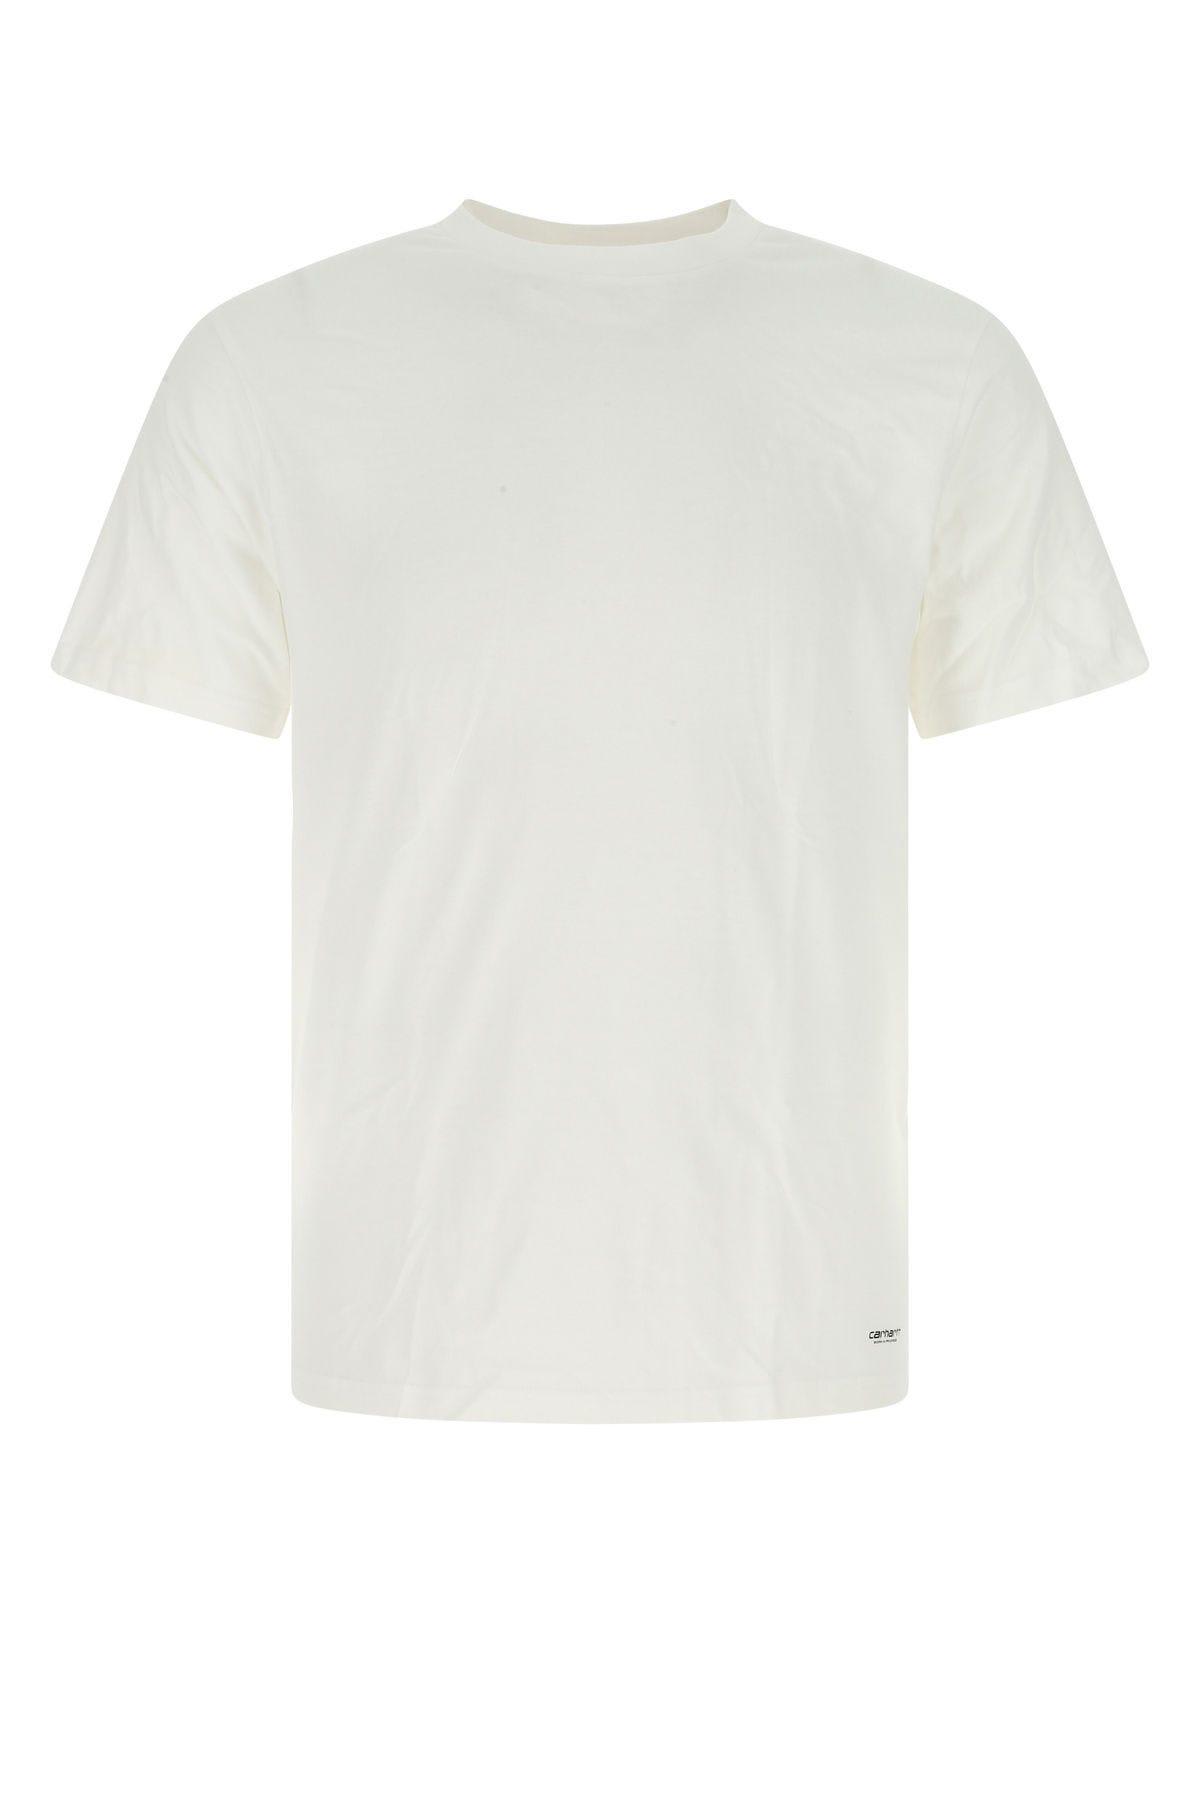 White Cotton Standard Crew Neck T-shirt Set